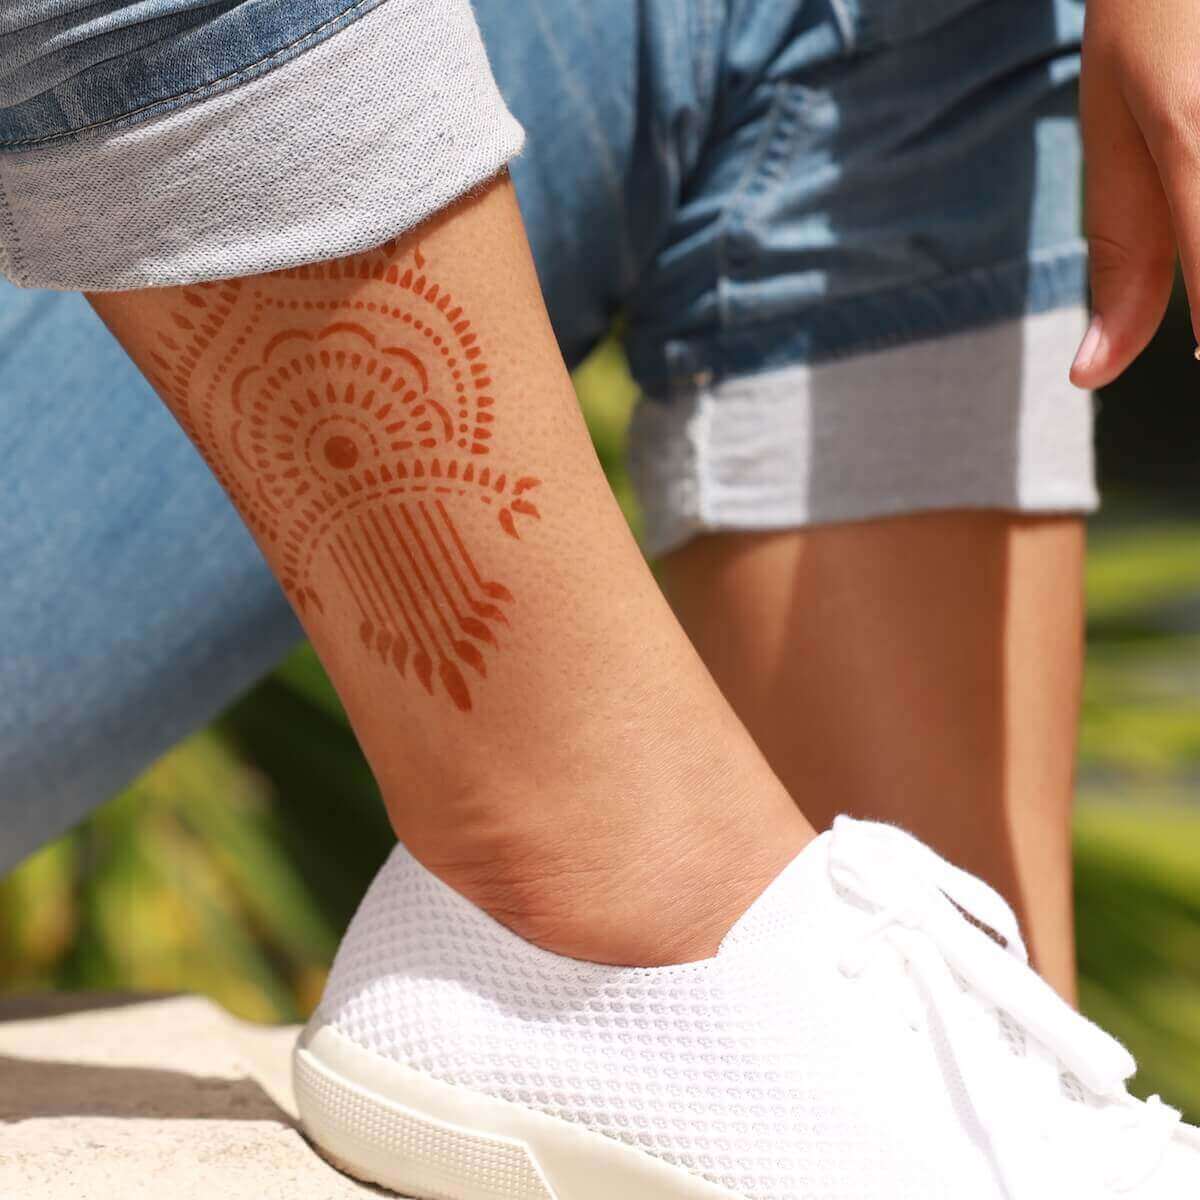 Fierce - henna design on ankle